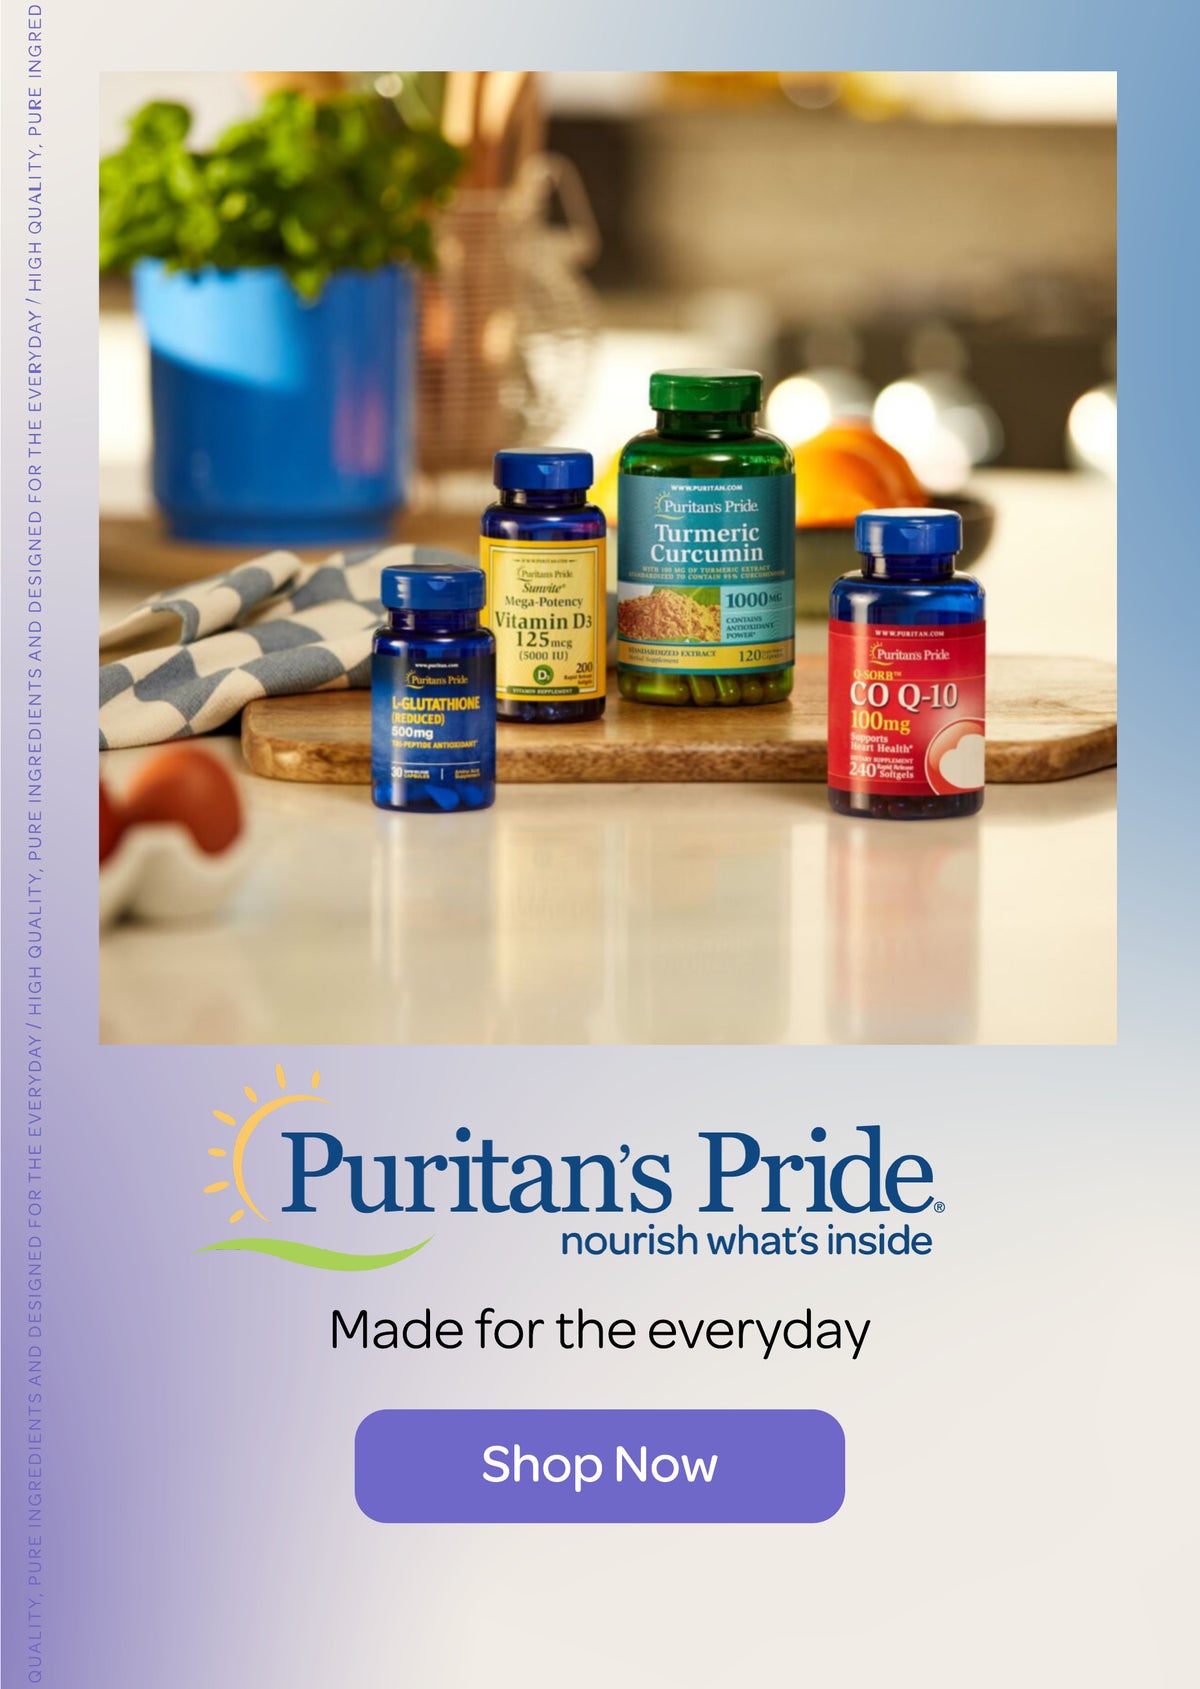 Puritan's Pride Nourish what's inside